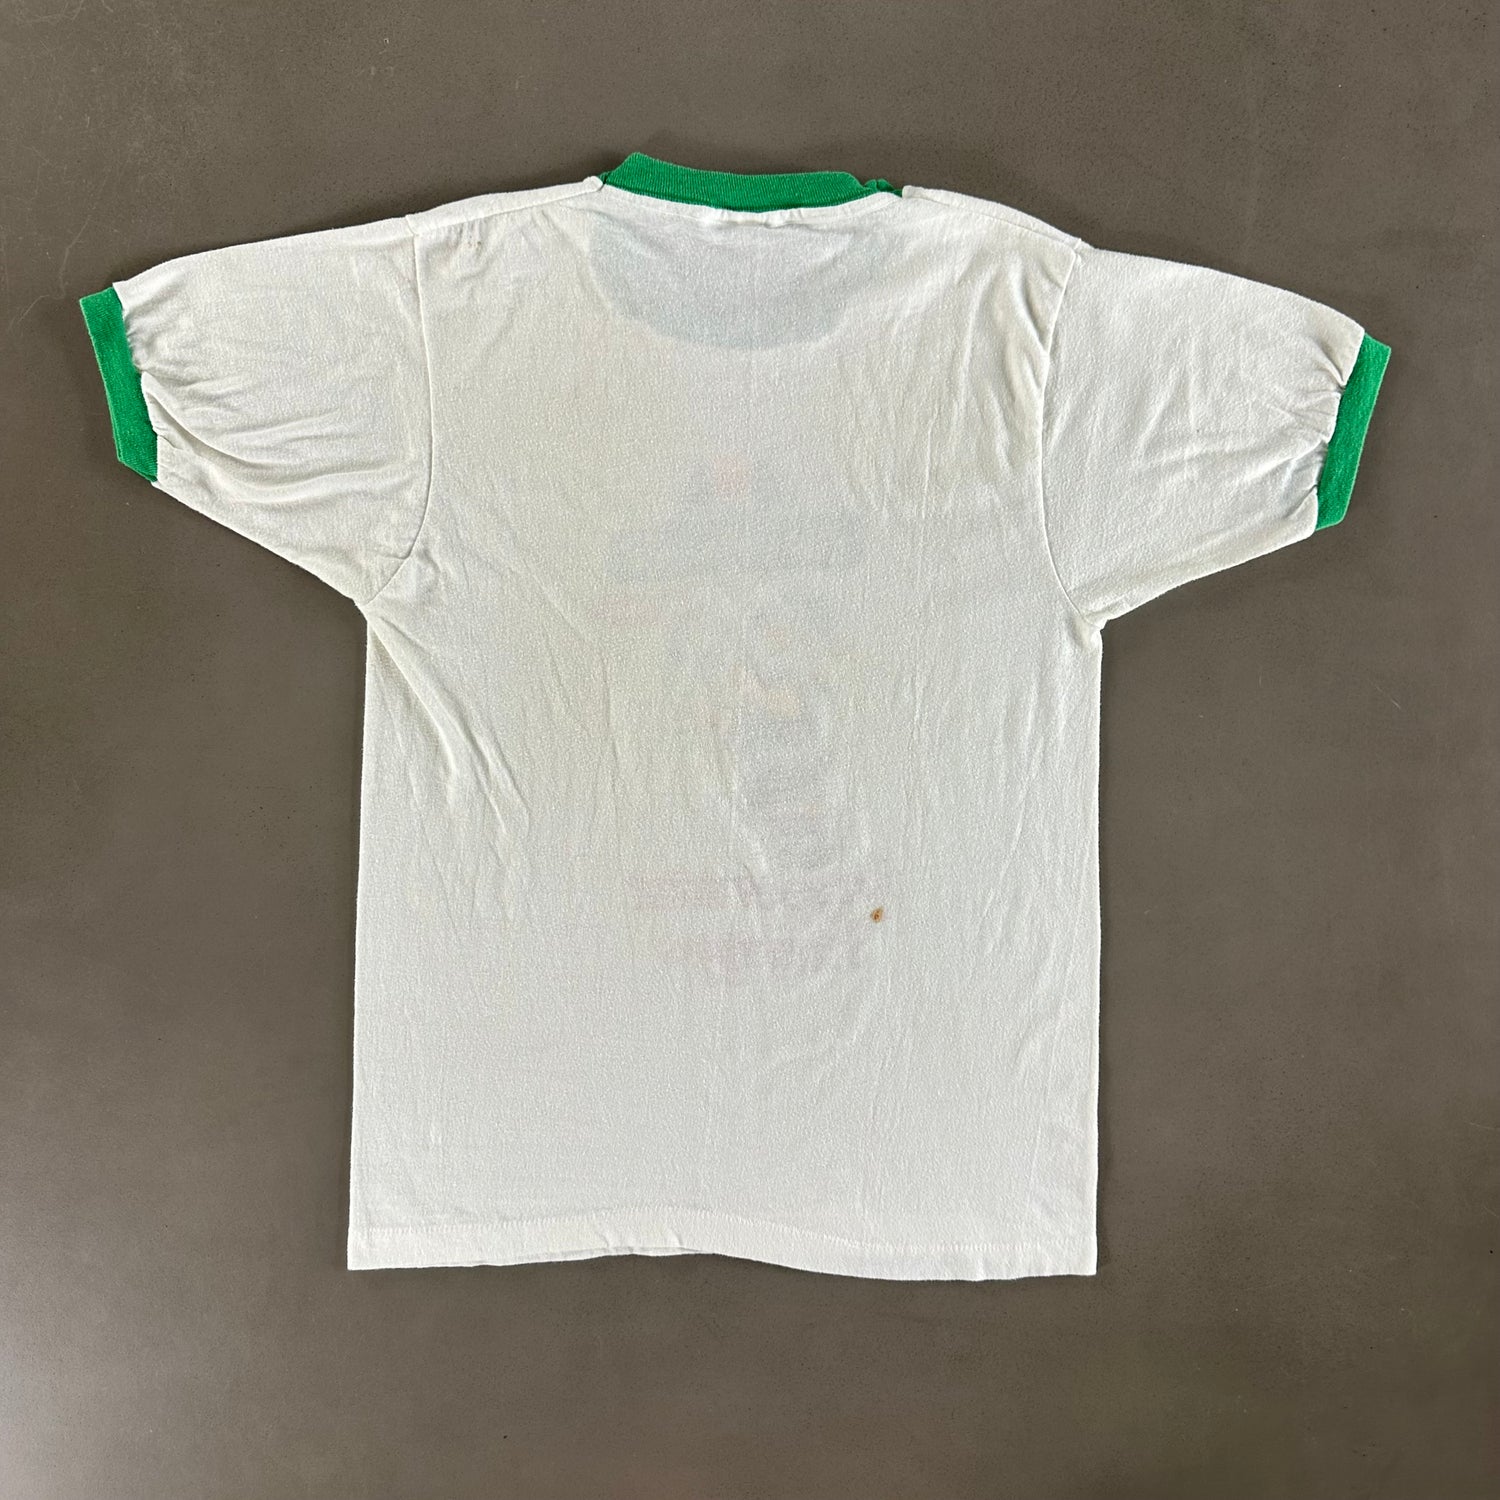 Vintage 1980s Schnapps T-shirt size Large